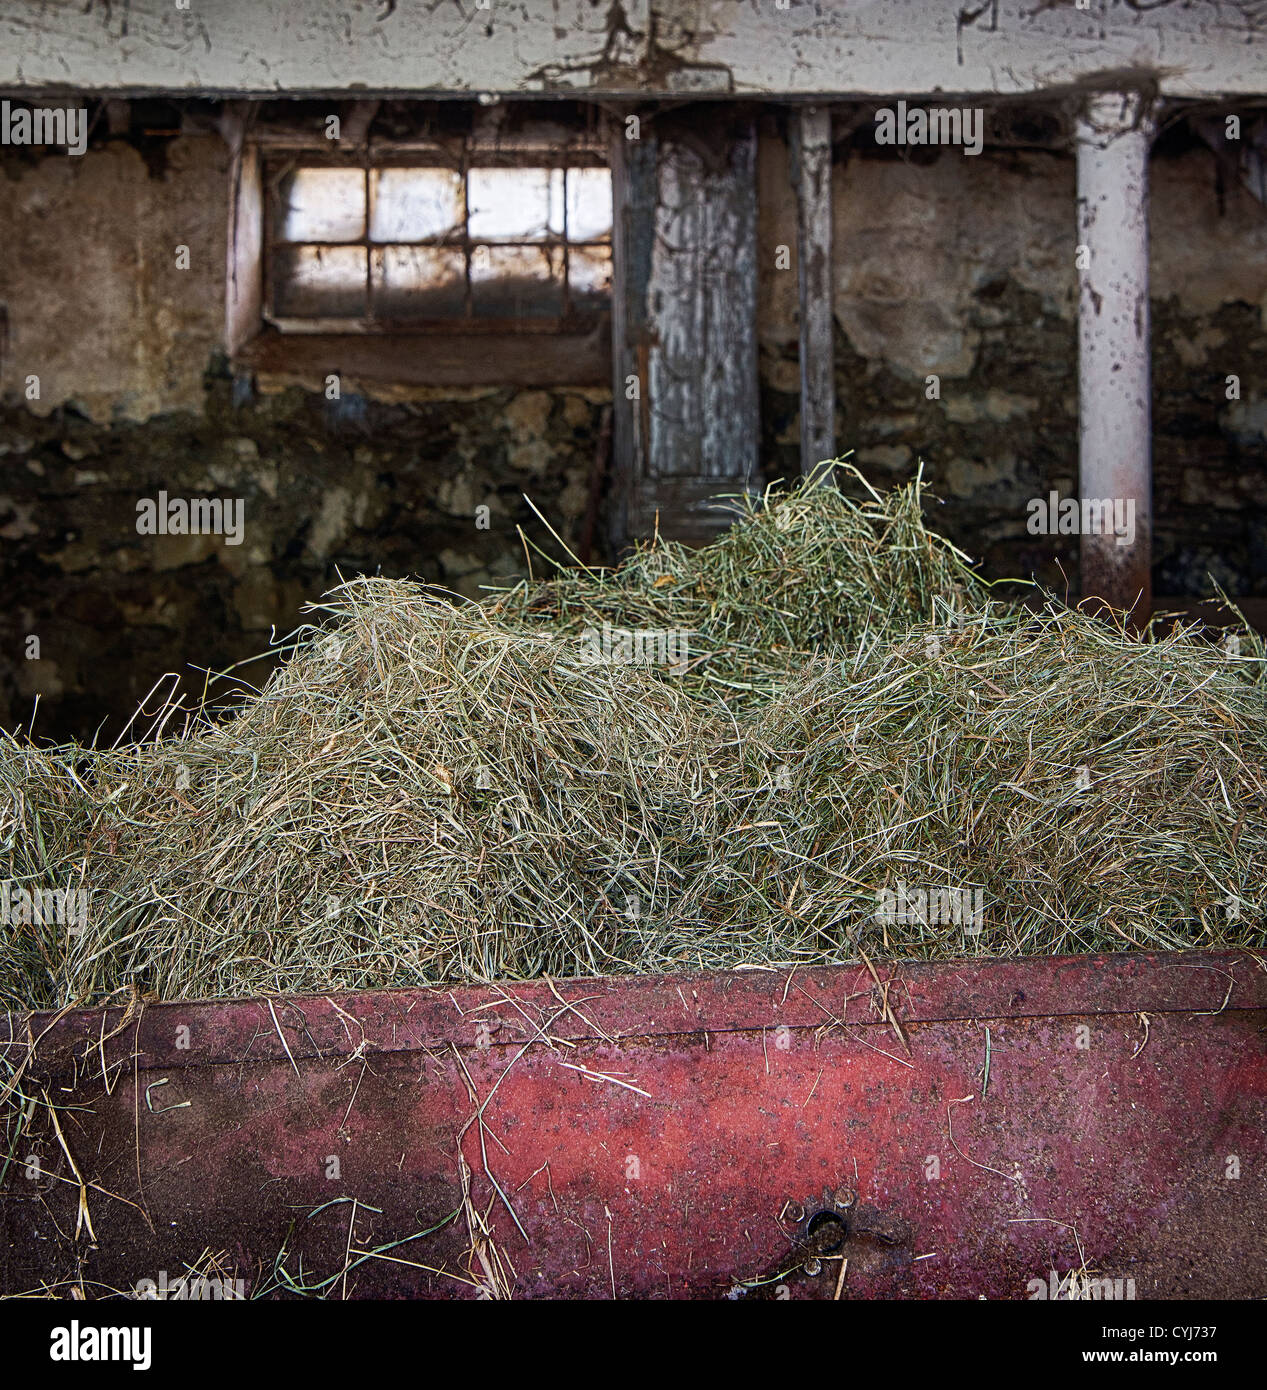 Hay in a barn bin to feed livestock Stock Photo